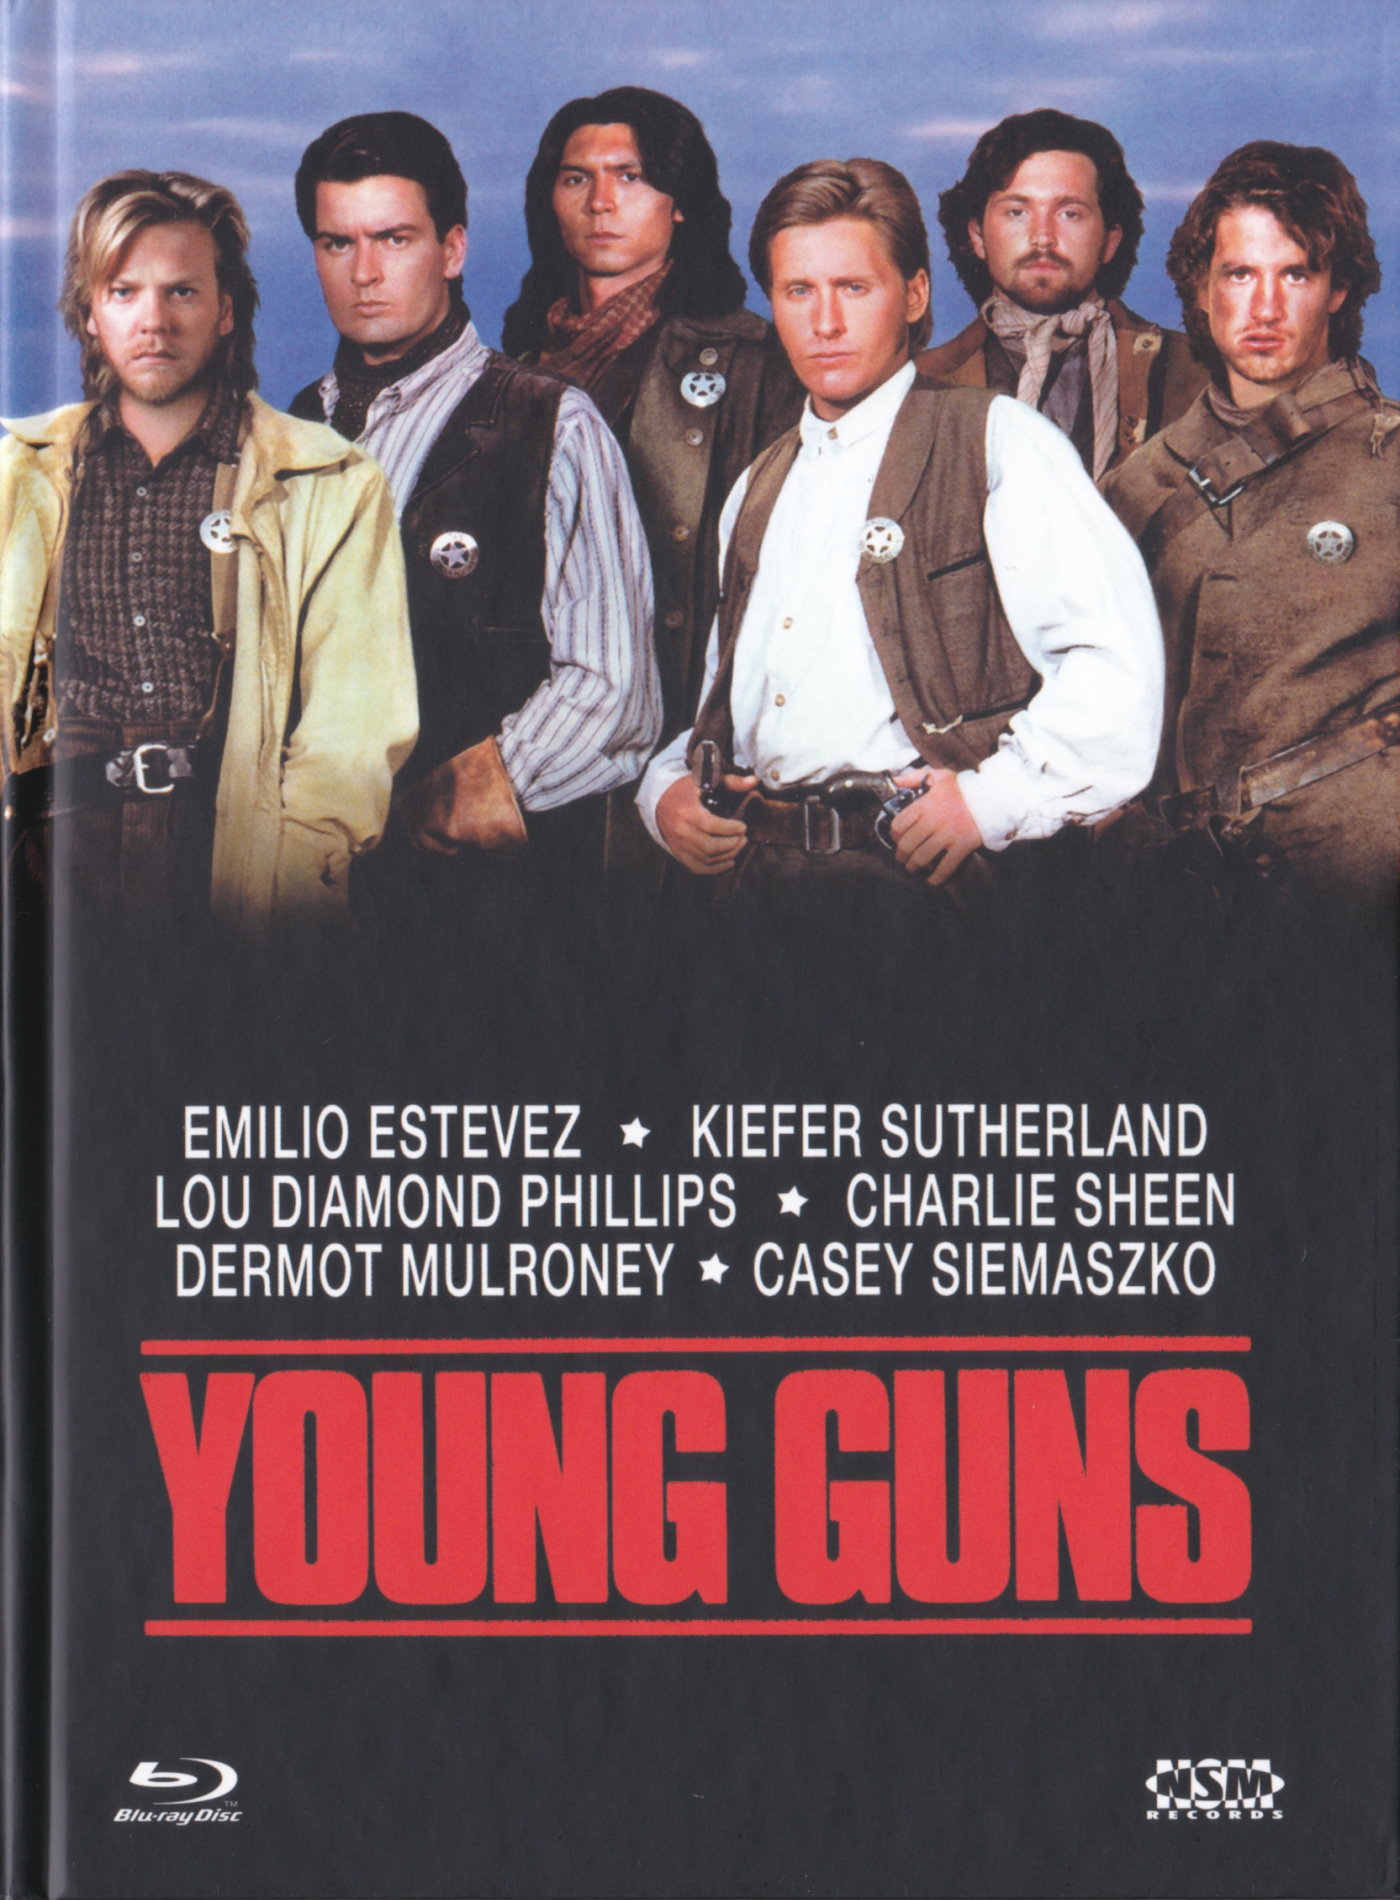 Cover - Young Guns.jpg